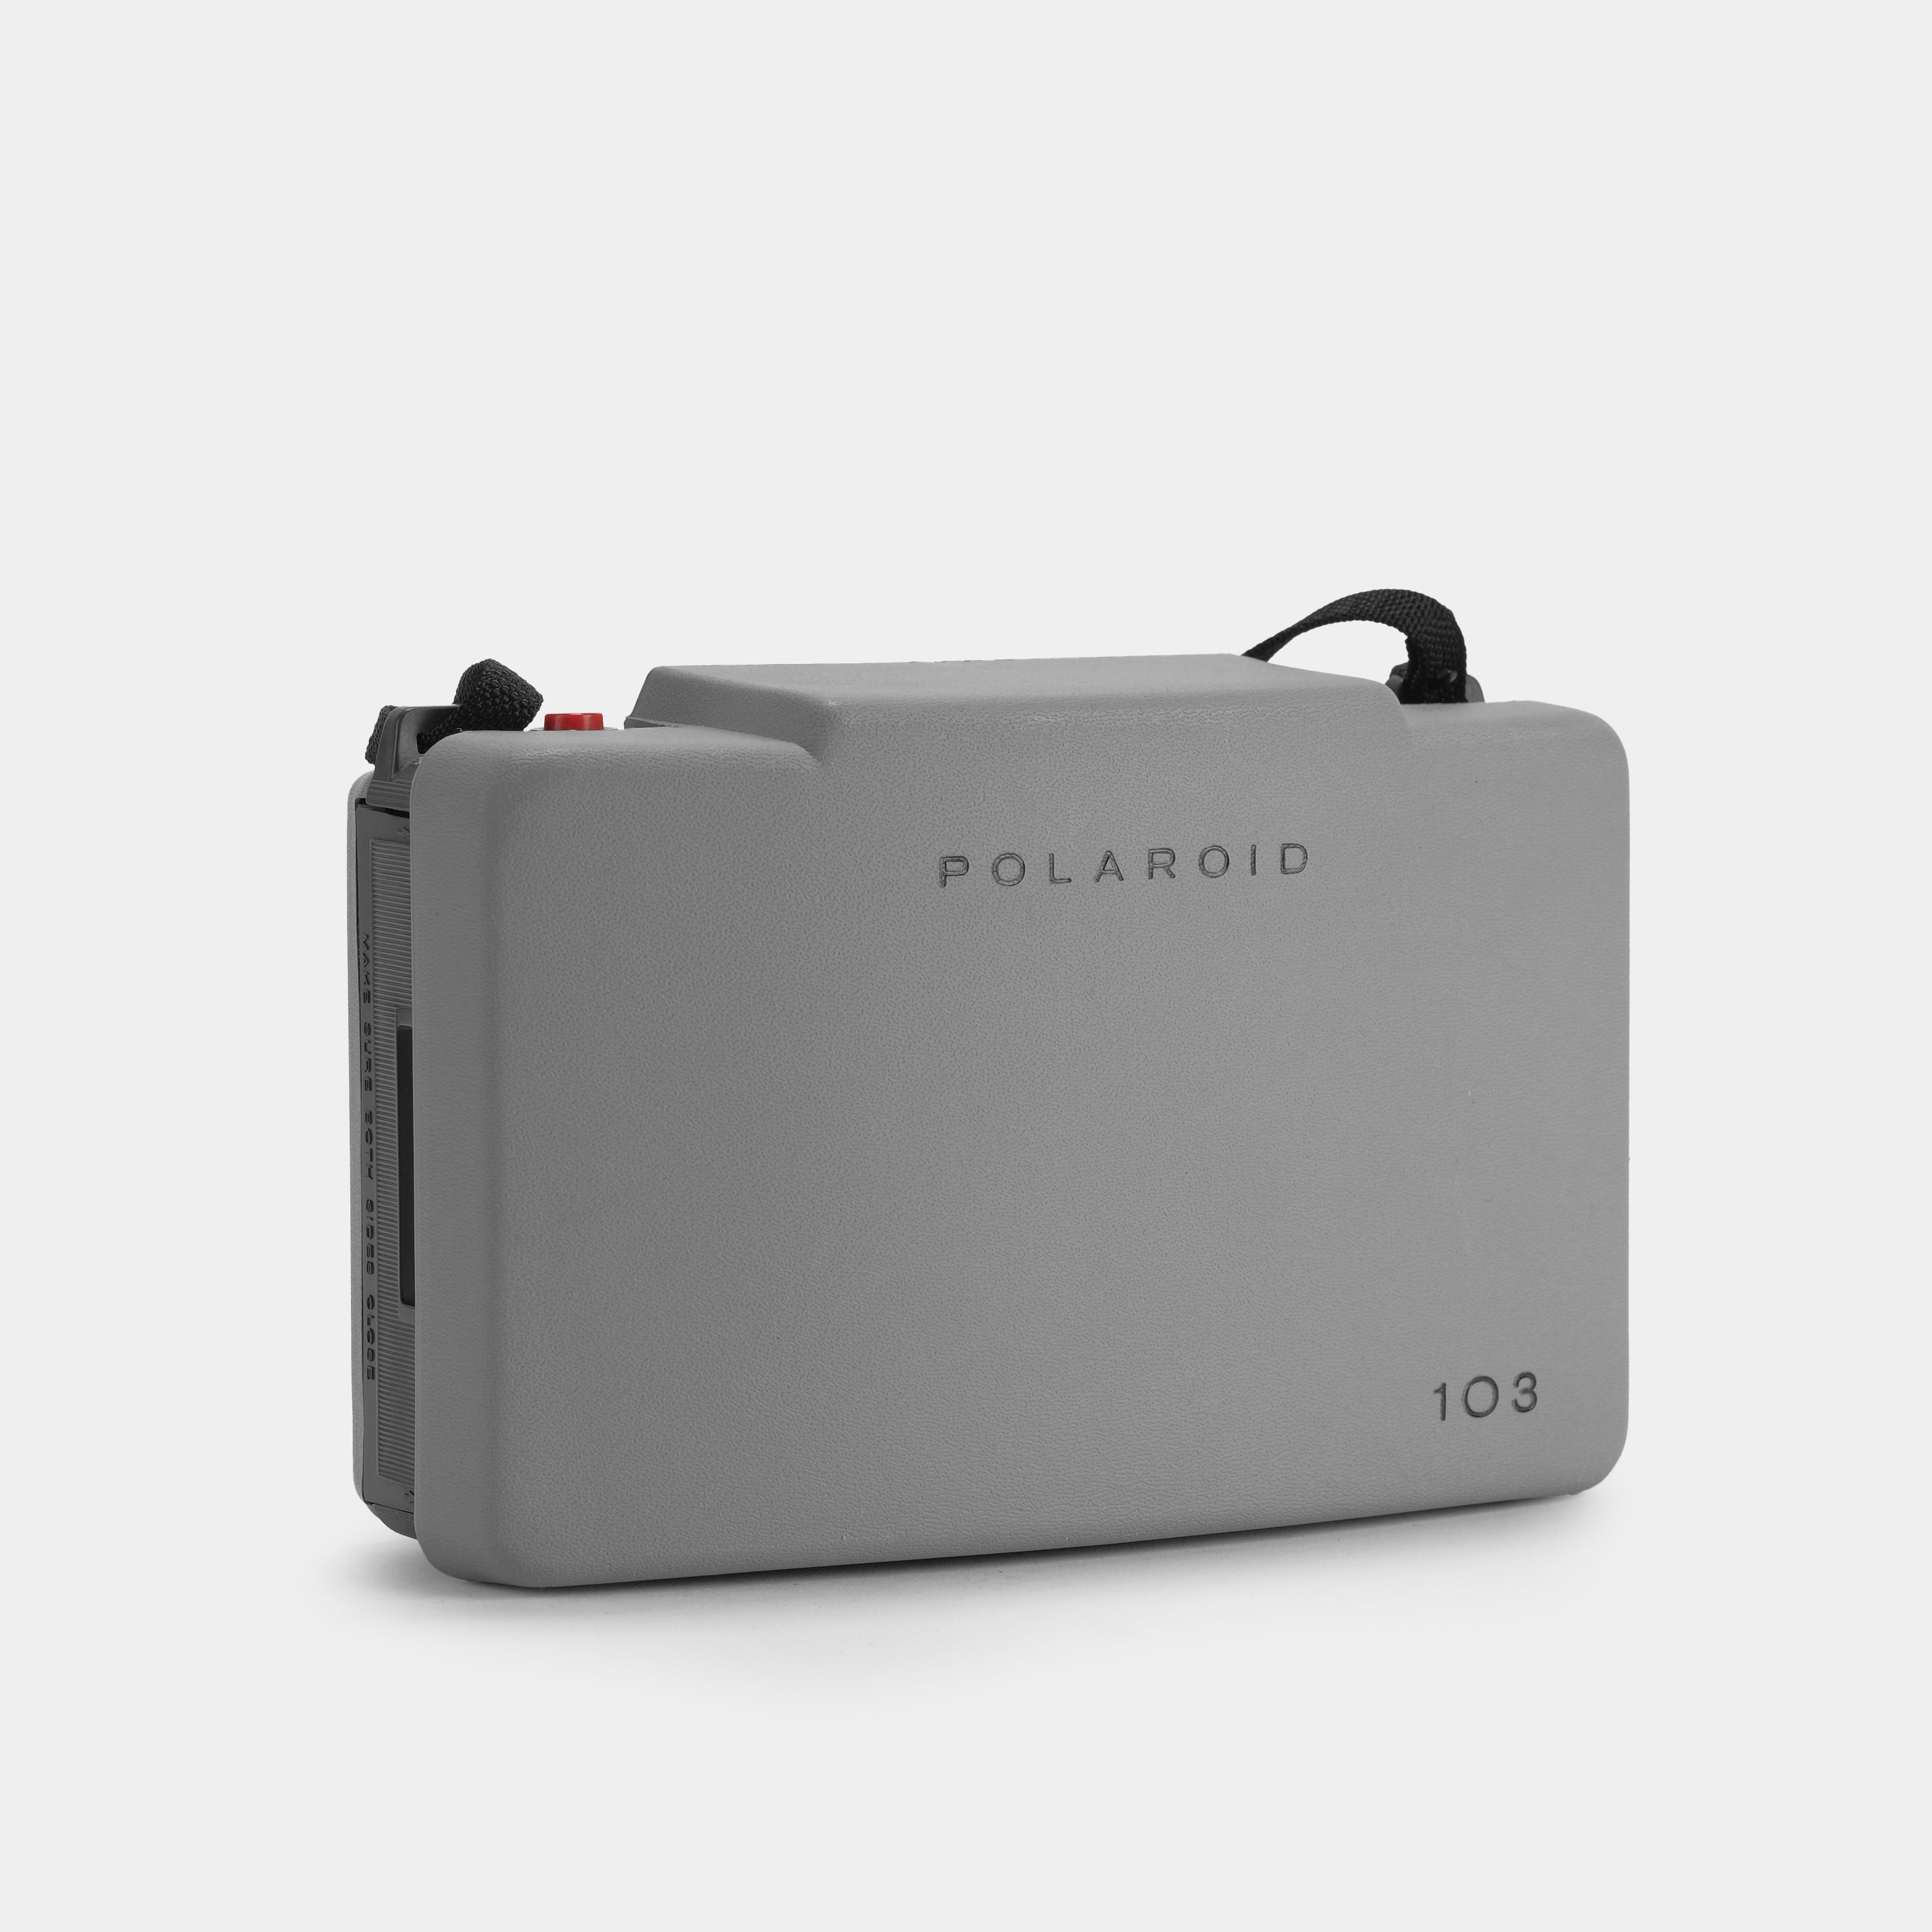 Polaroid Model 103 Packfilm Land Camera